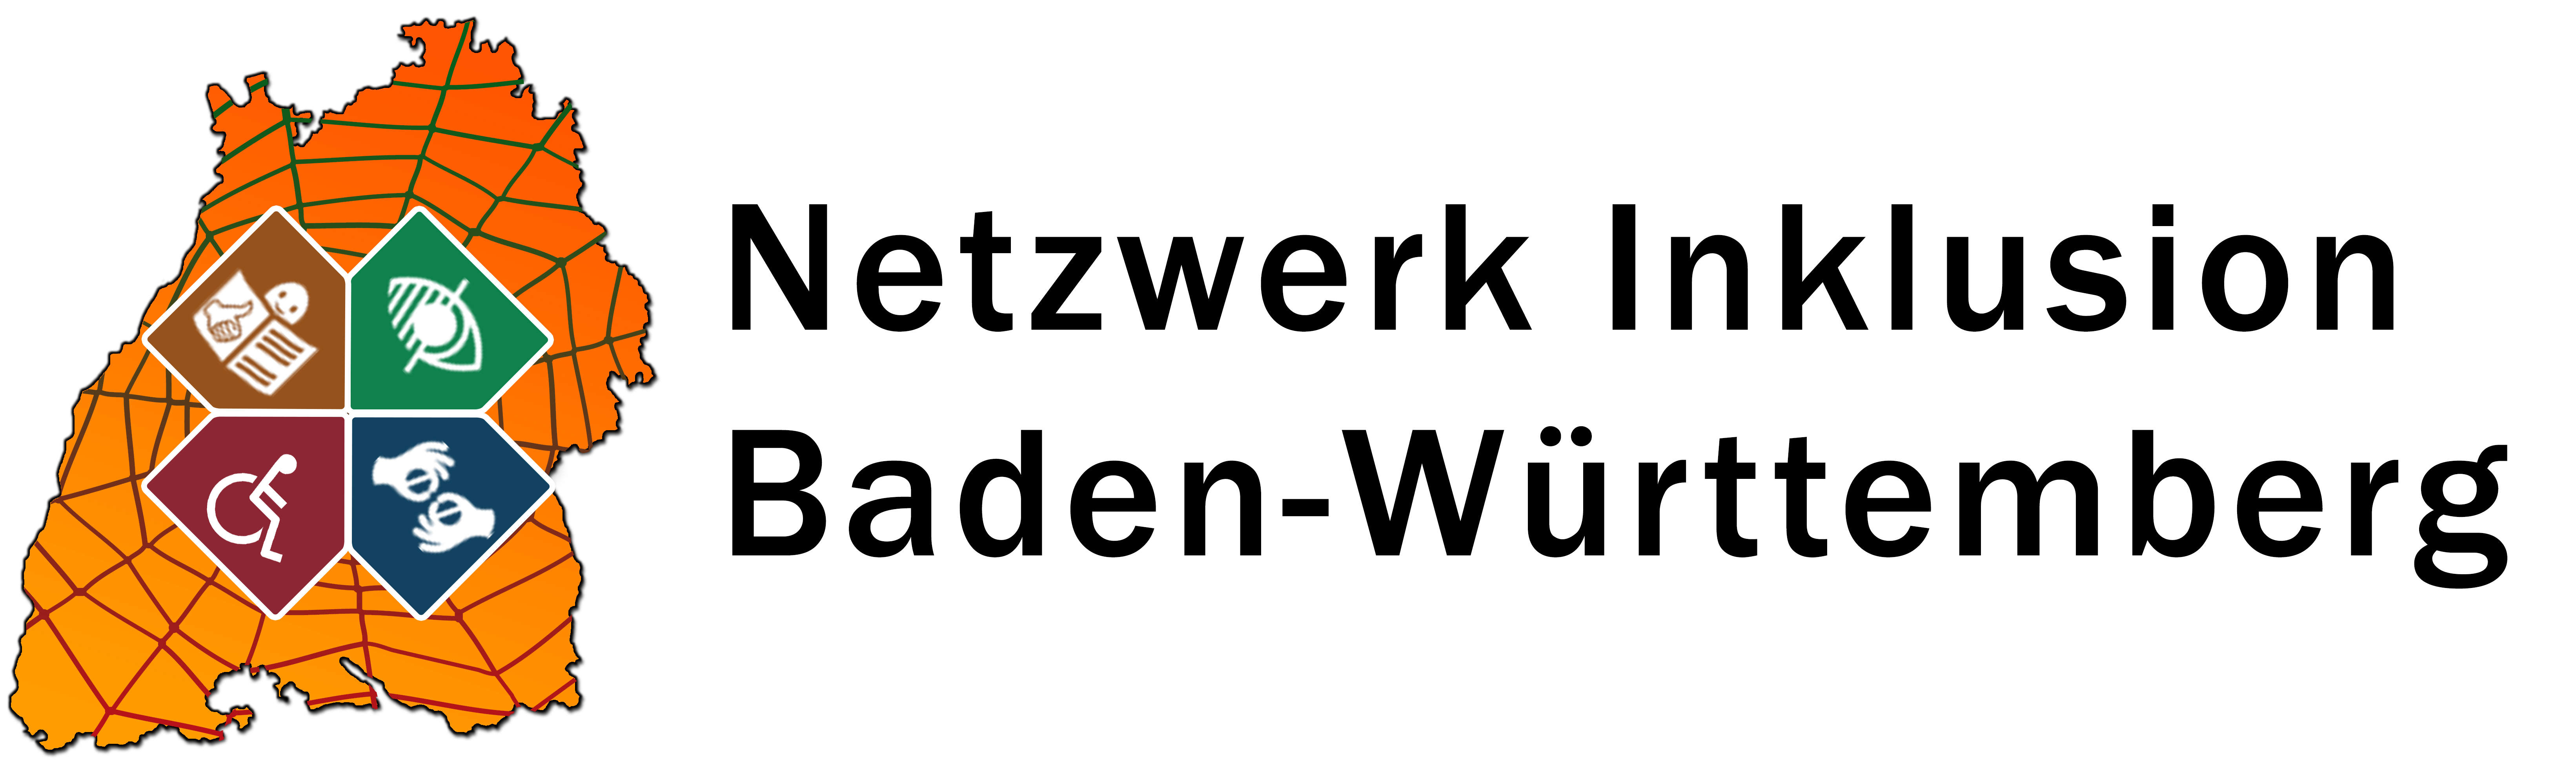 Logo Netzwerk Inklusion Baden-Württemberg neu 9-2018